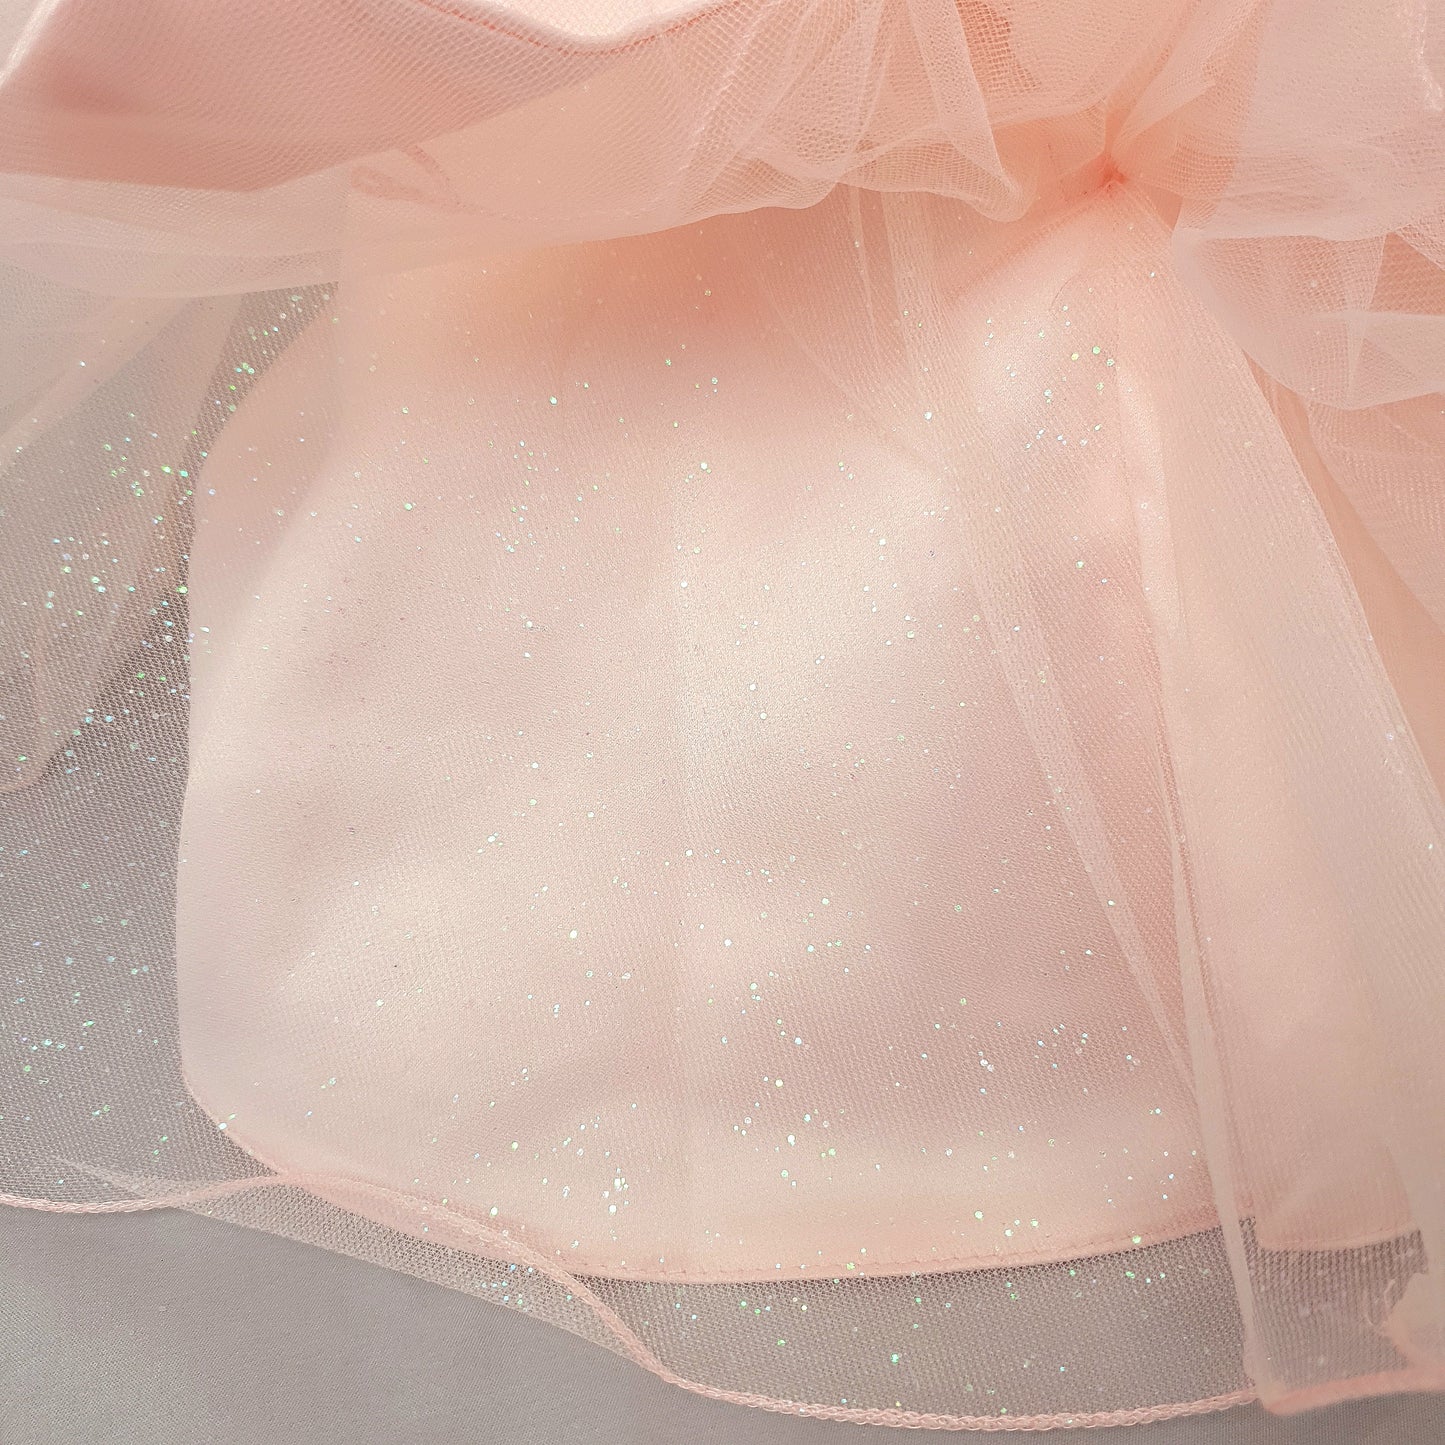 Flower fairy peach dress